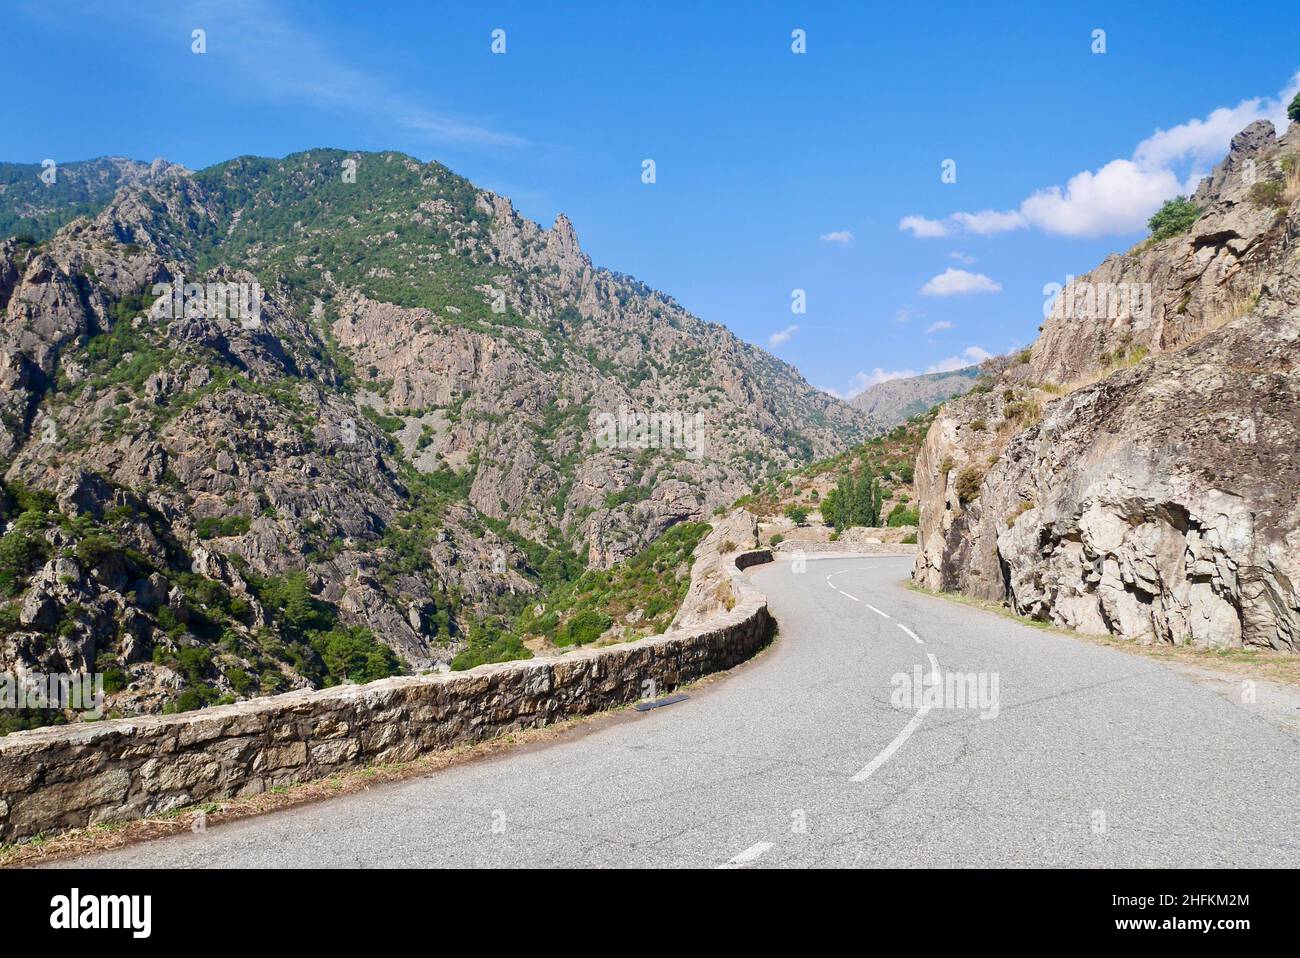 Scenic mountain road in spectacular Scala di Santa Regina. Corsica, France. High quality photo Stock Photo